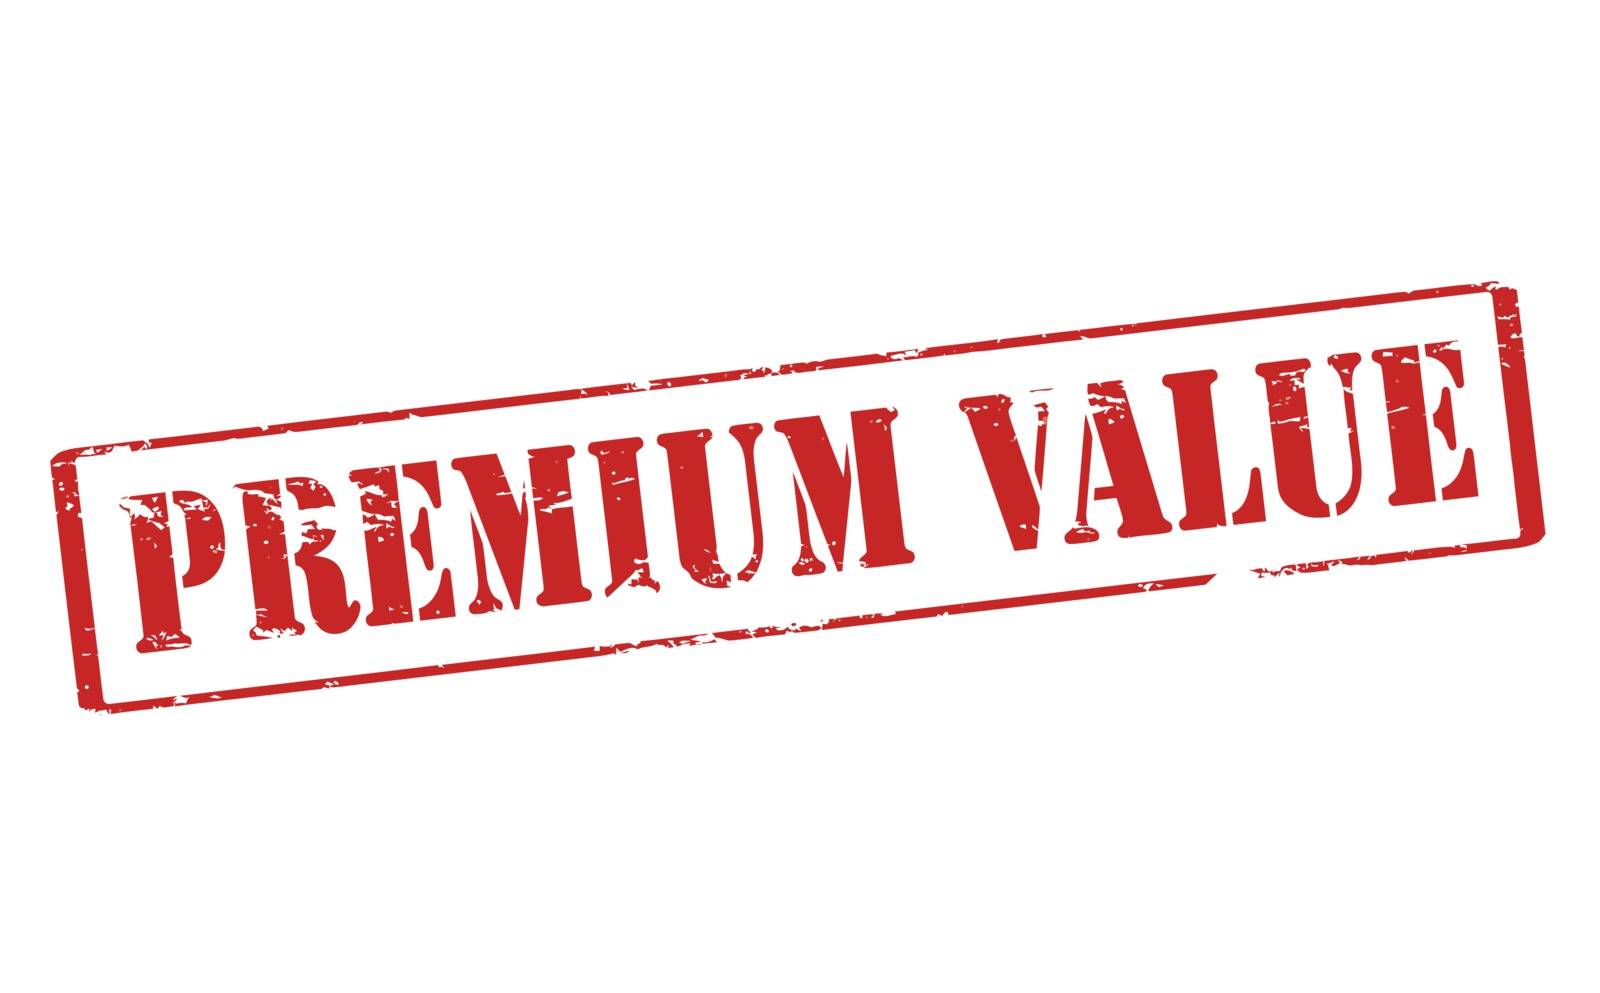 Premium value by carmenbobo